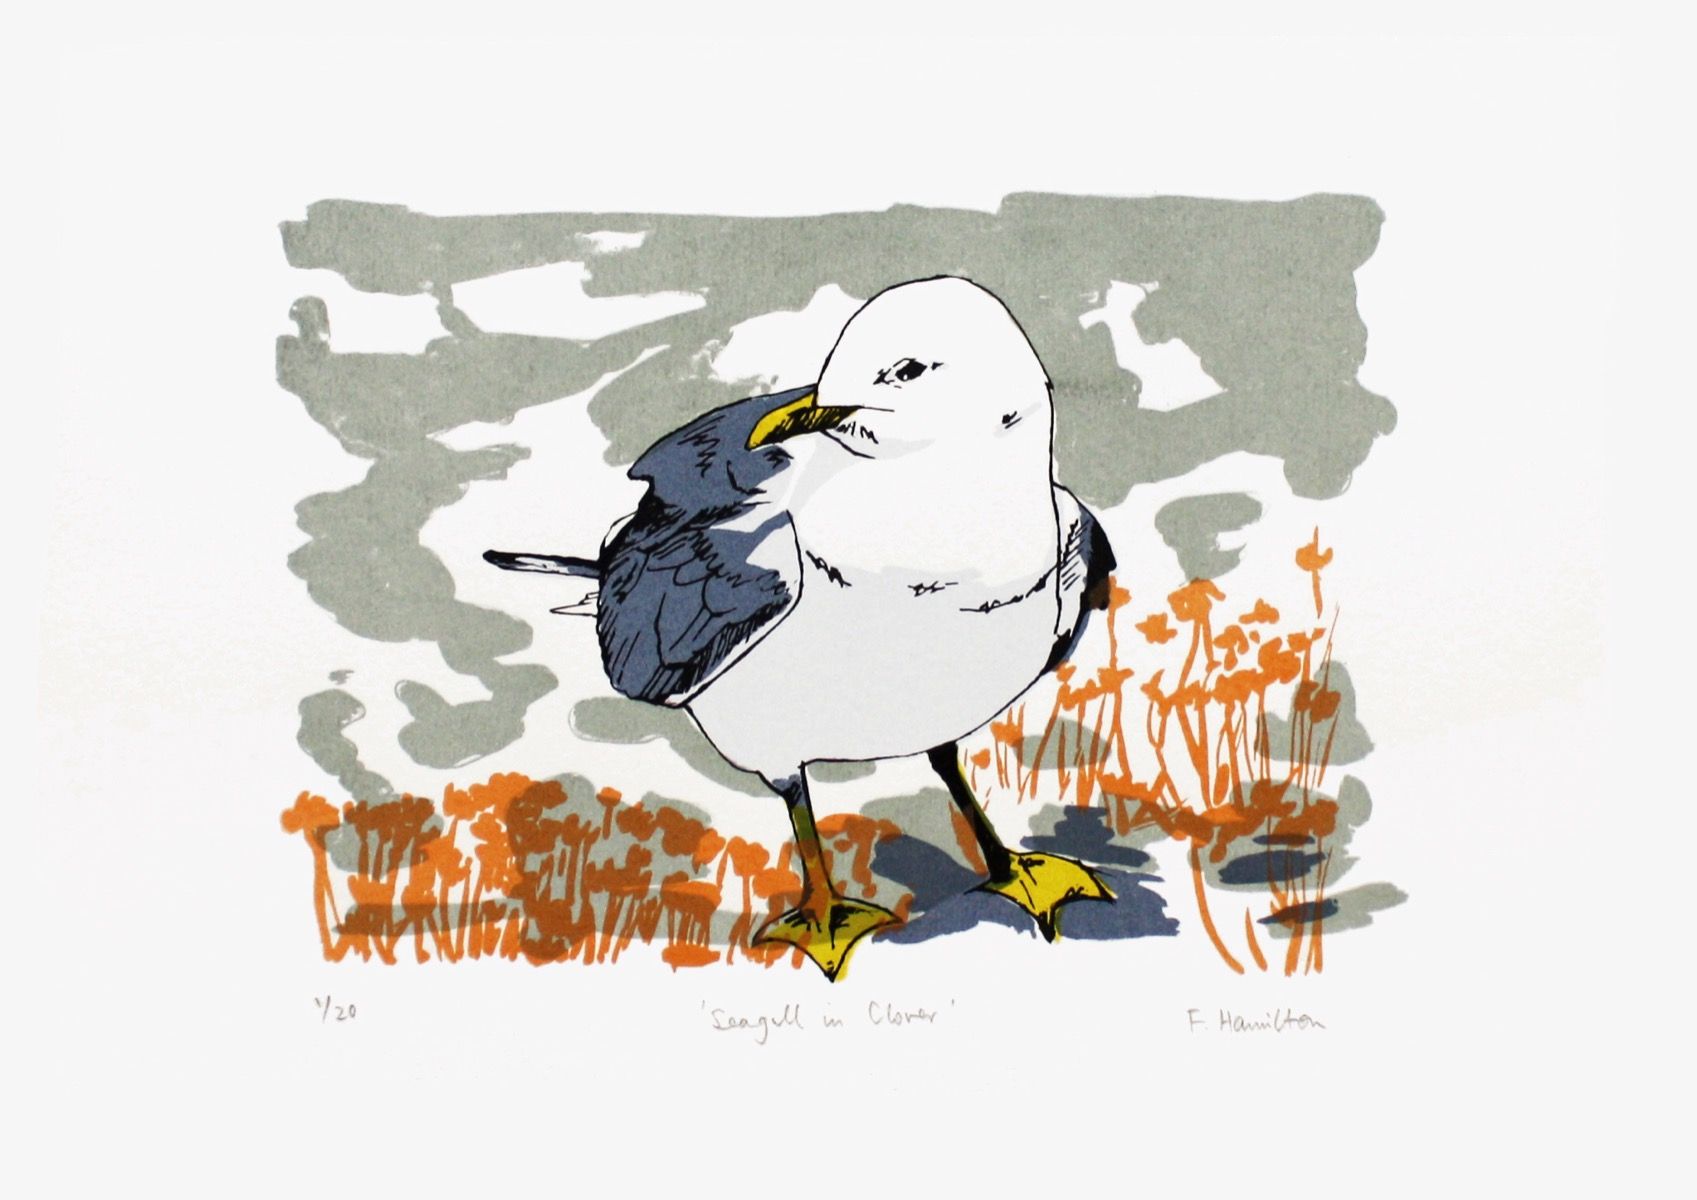 Seagull in Clover by Fiona Hamilton